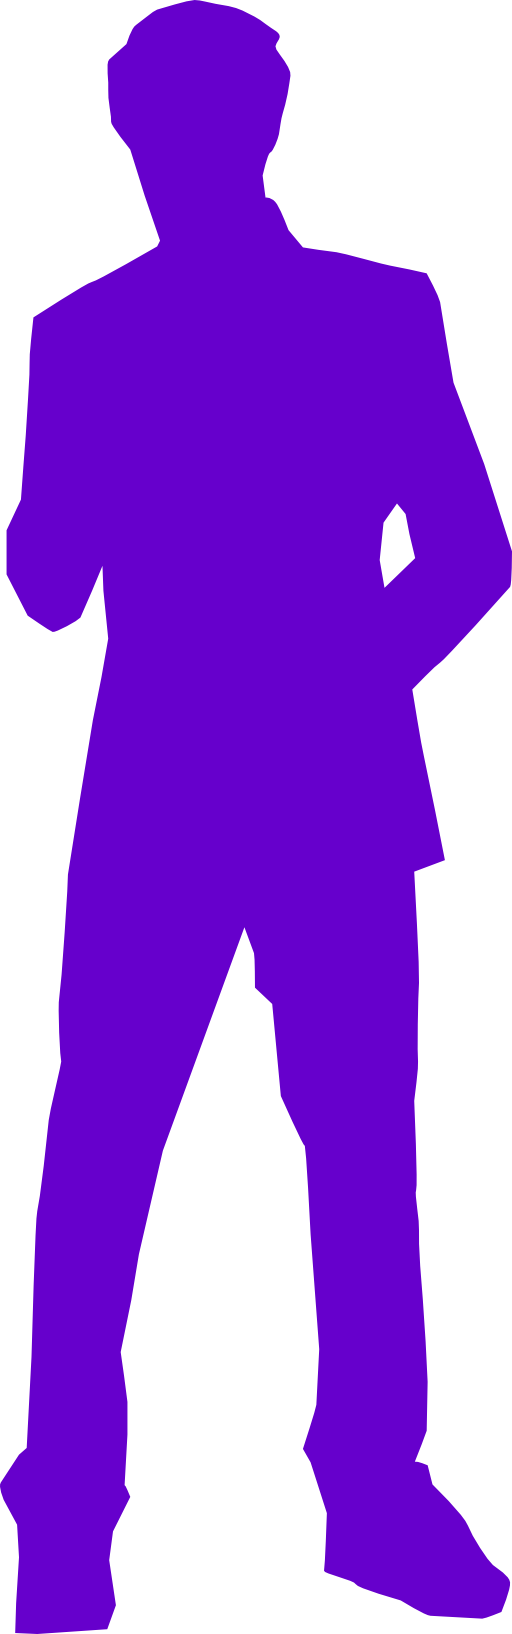 Man In A Suit - Purple Man Silhouette (512x1634)